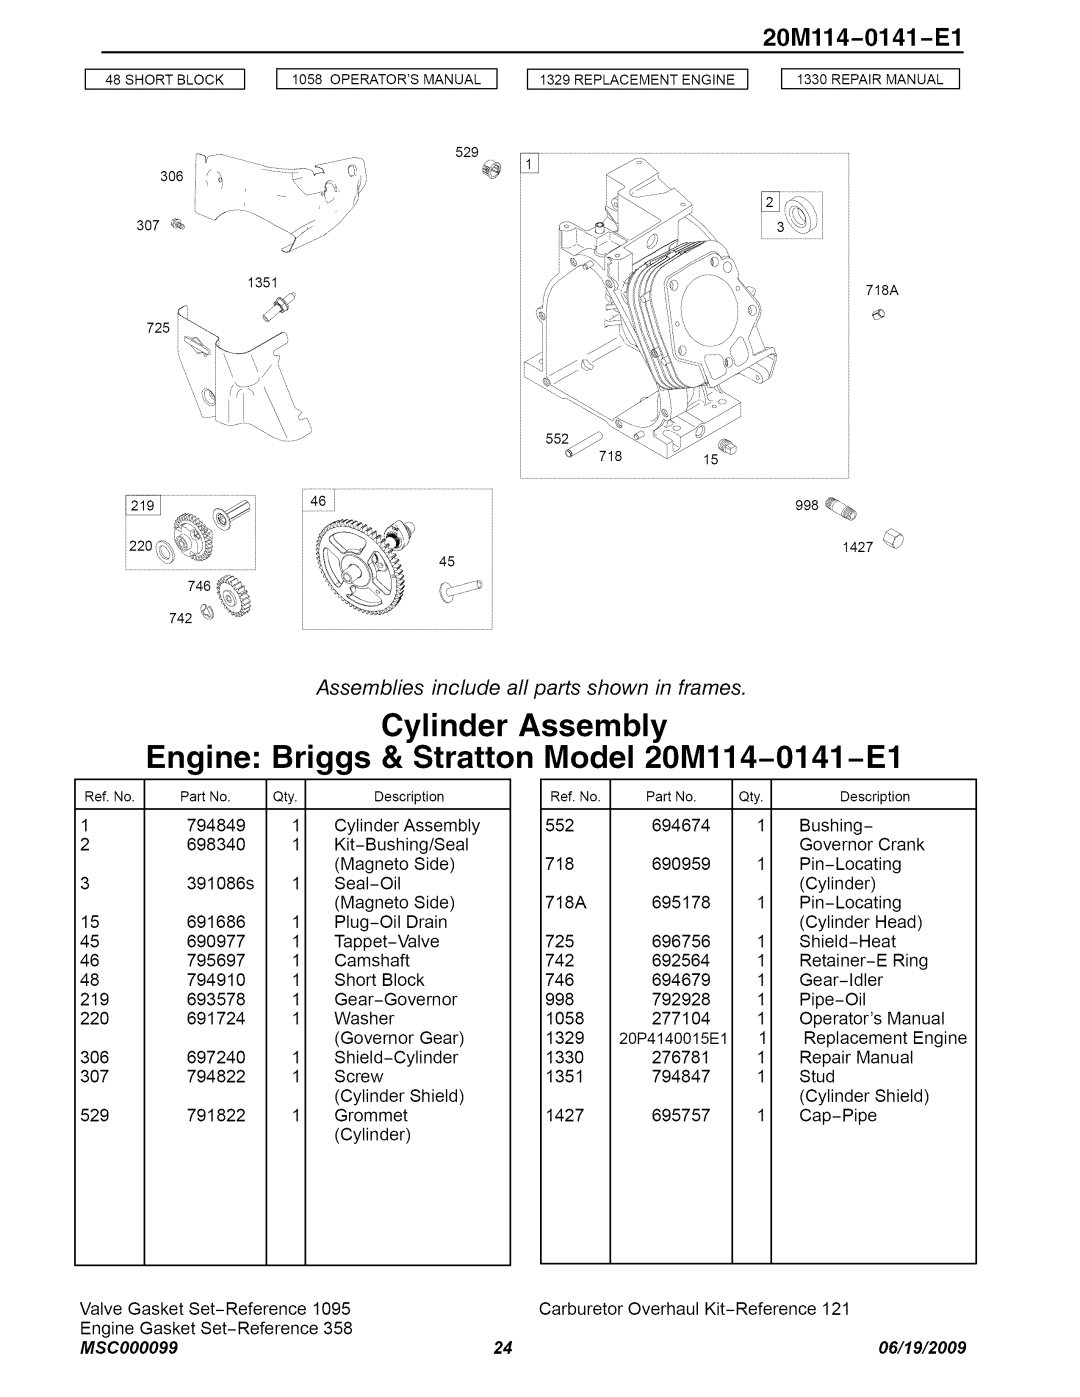 Craftsman C950-52943-0 Cylinder Assembly, Engine: Briggs & Stratton Model 20M114-0141-E1, 20Ml14-0141 -El, MSC000099 